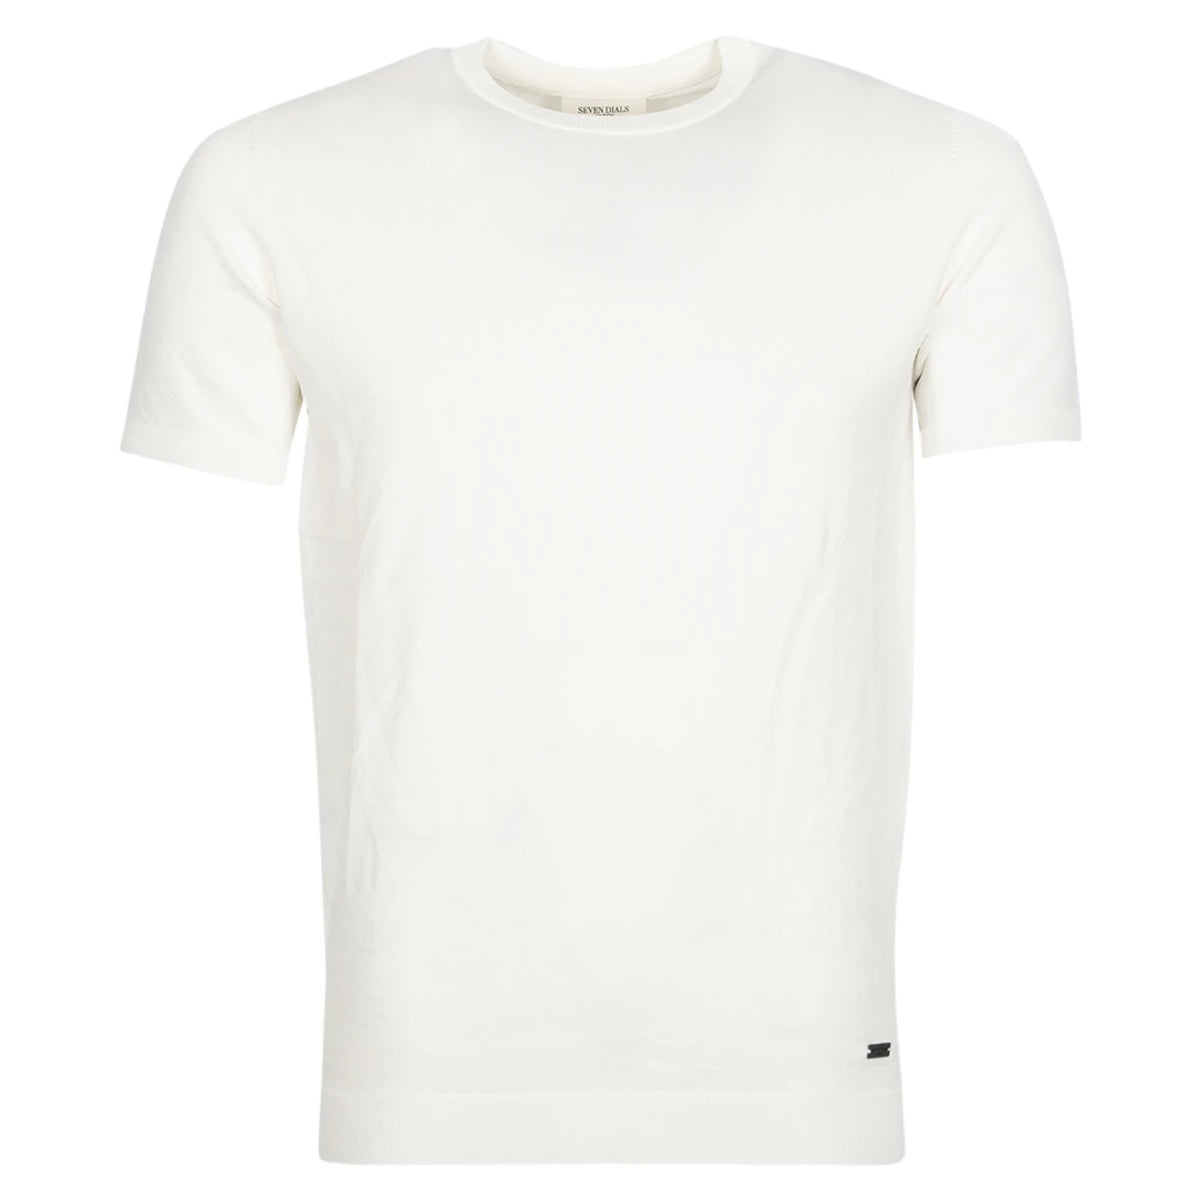 SEVEN DIALS T-shirt wit | Odell